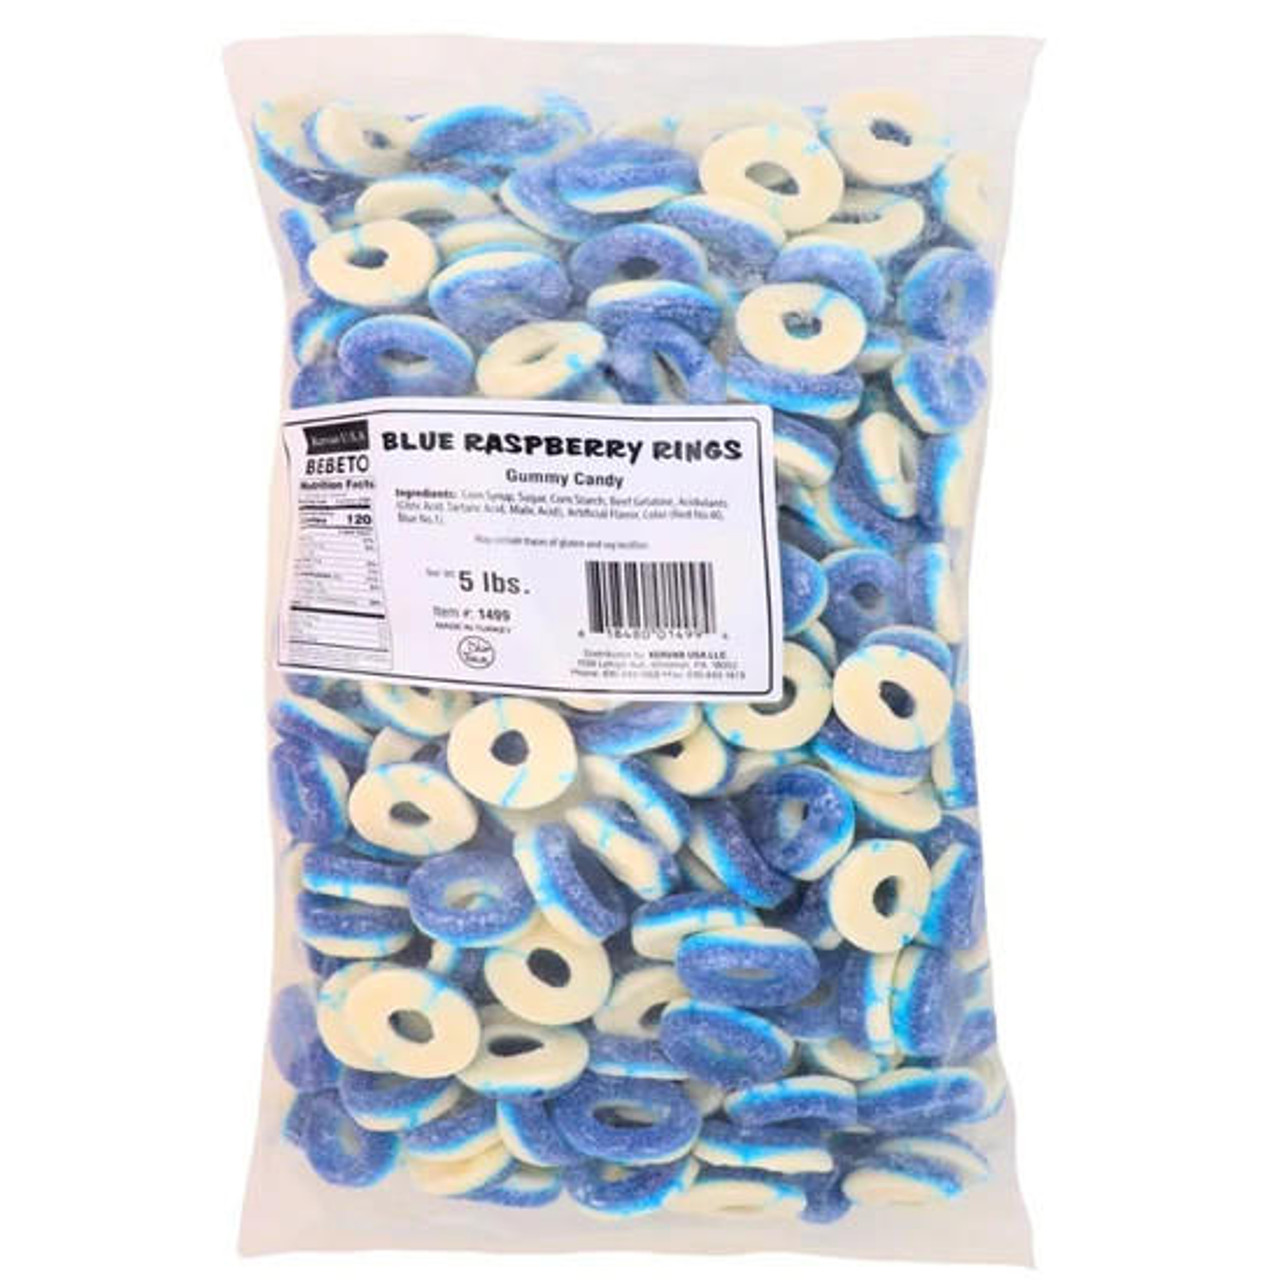  Kervan Gummy Blue Raspberry Rings 5 lb. - 4/Case - Blue Raspberry Flavor 